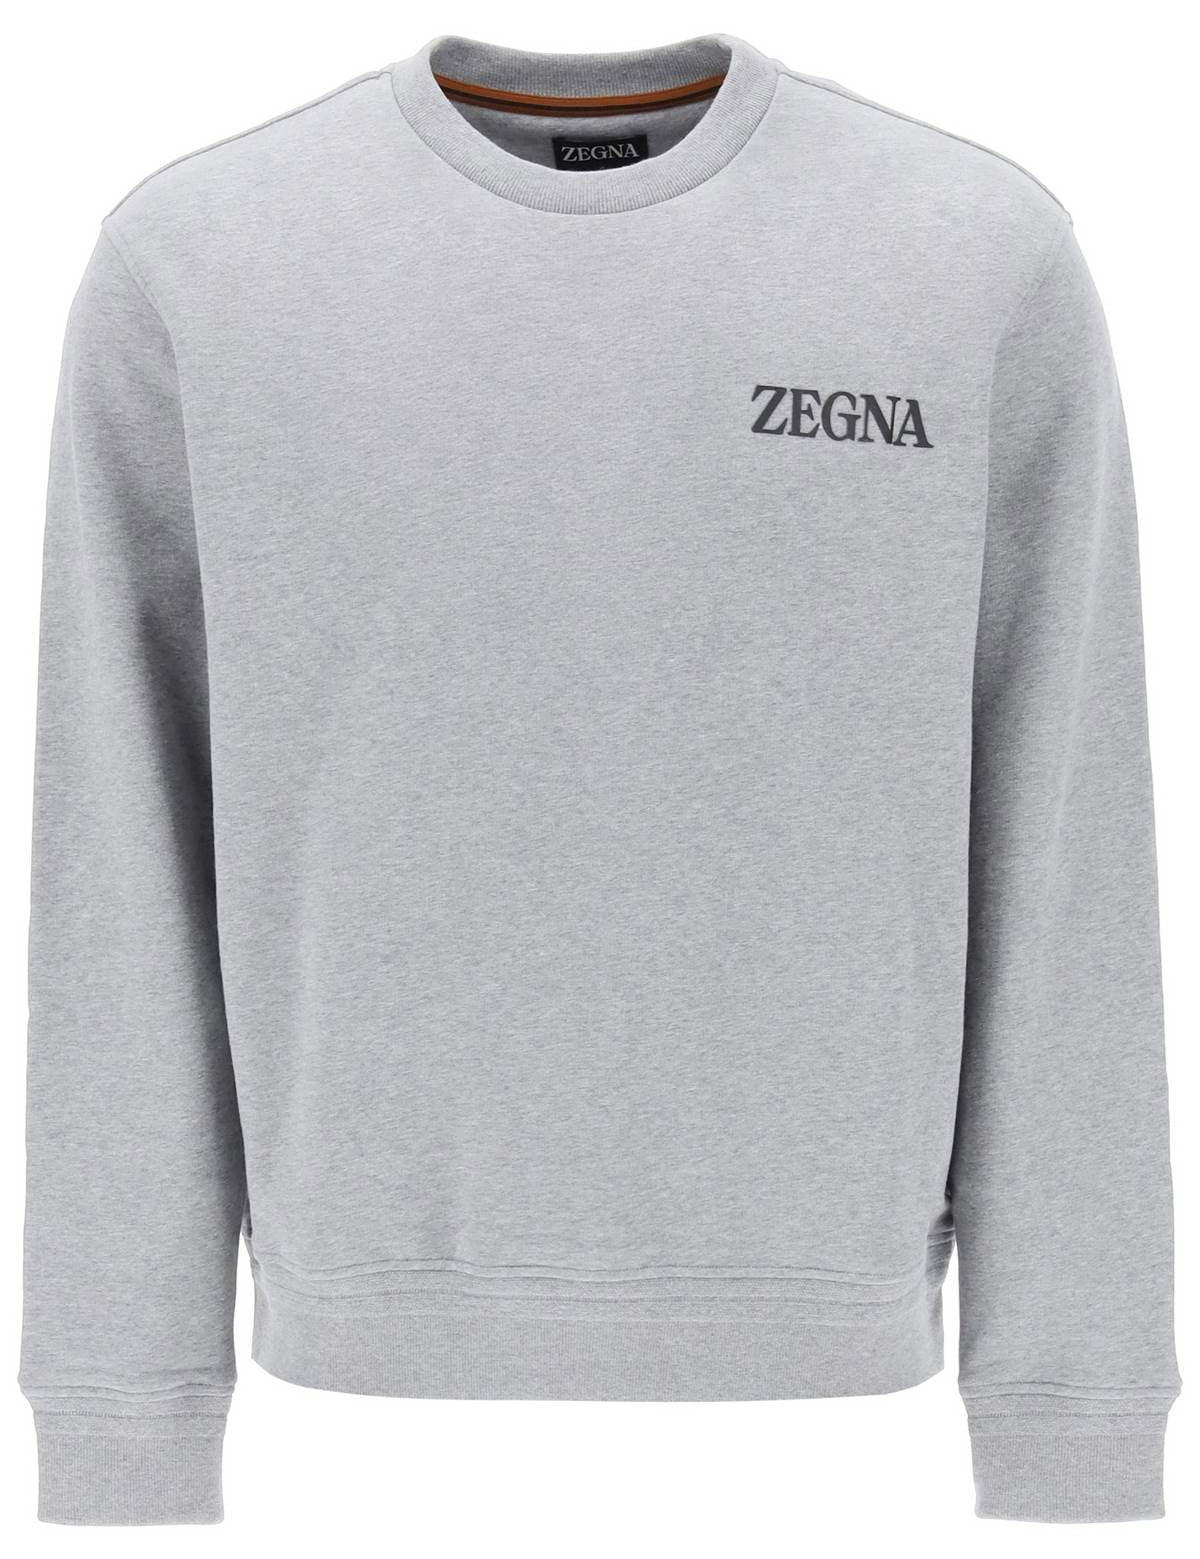 zegna-crew-neck-sweatshirt-with-flocked-logo.jpg